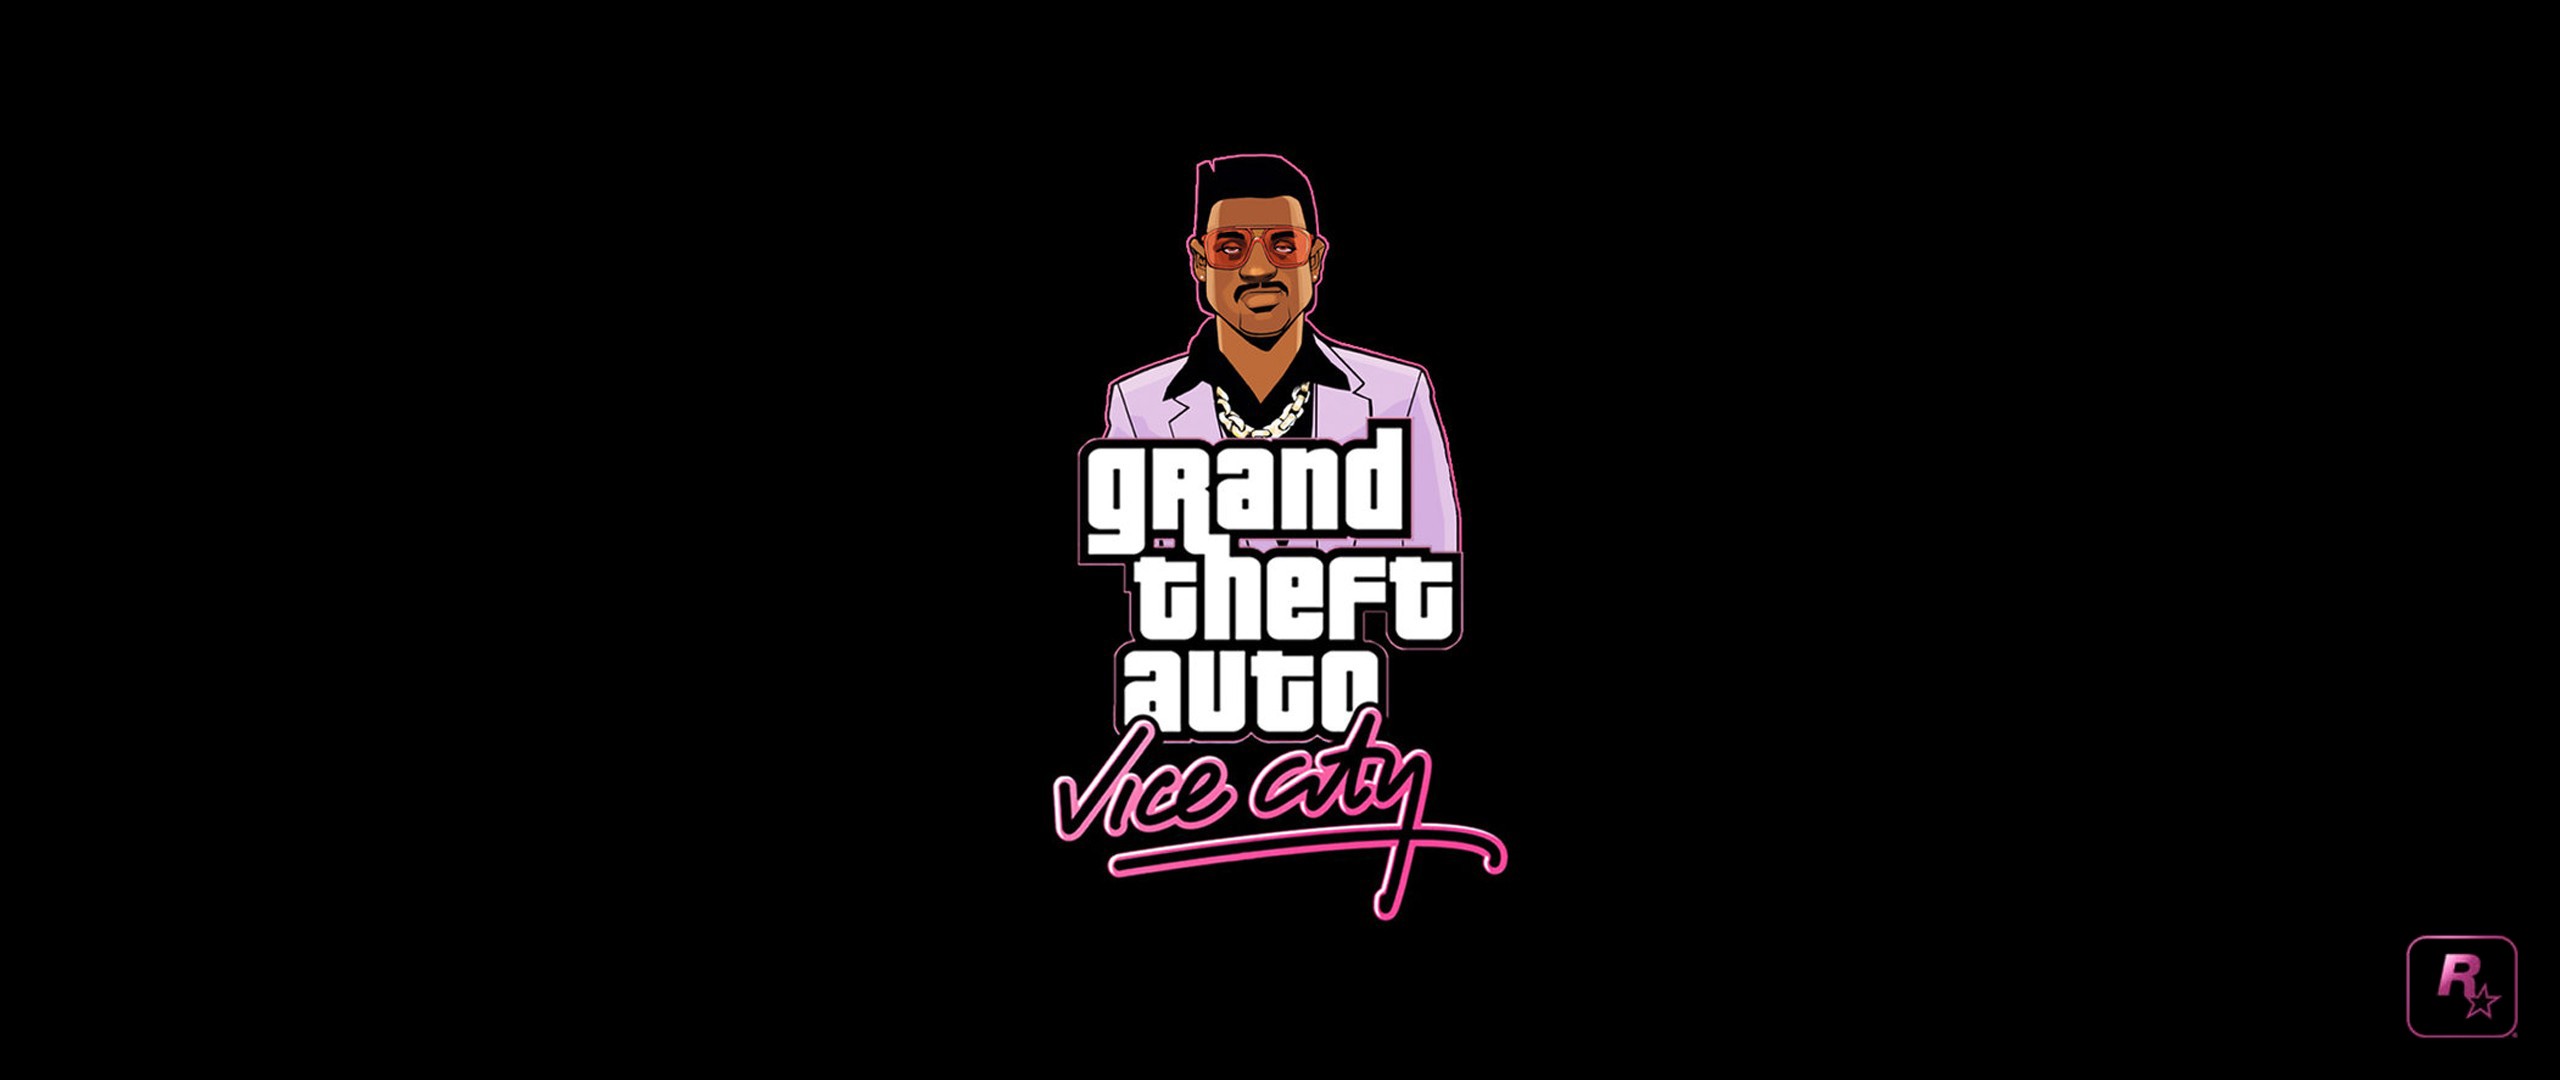 ultra wide, Video games, Grand Theft Auto, Grand Theft Auto Vice City Wallpaper